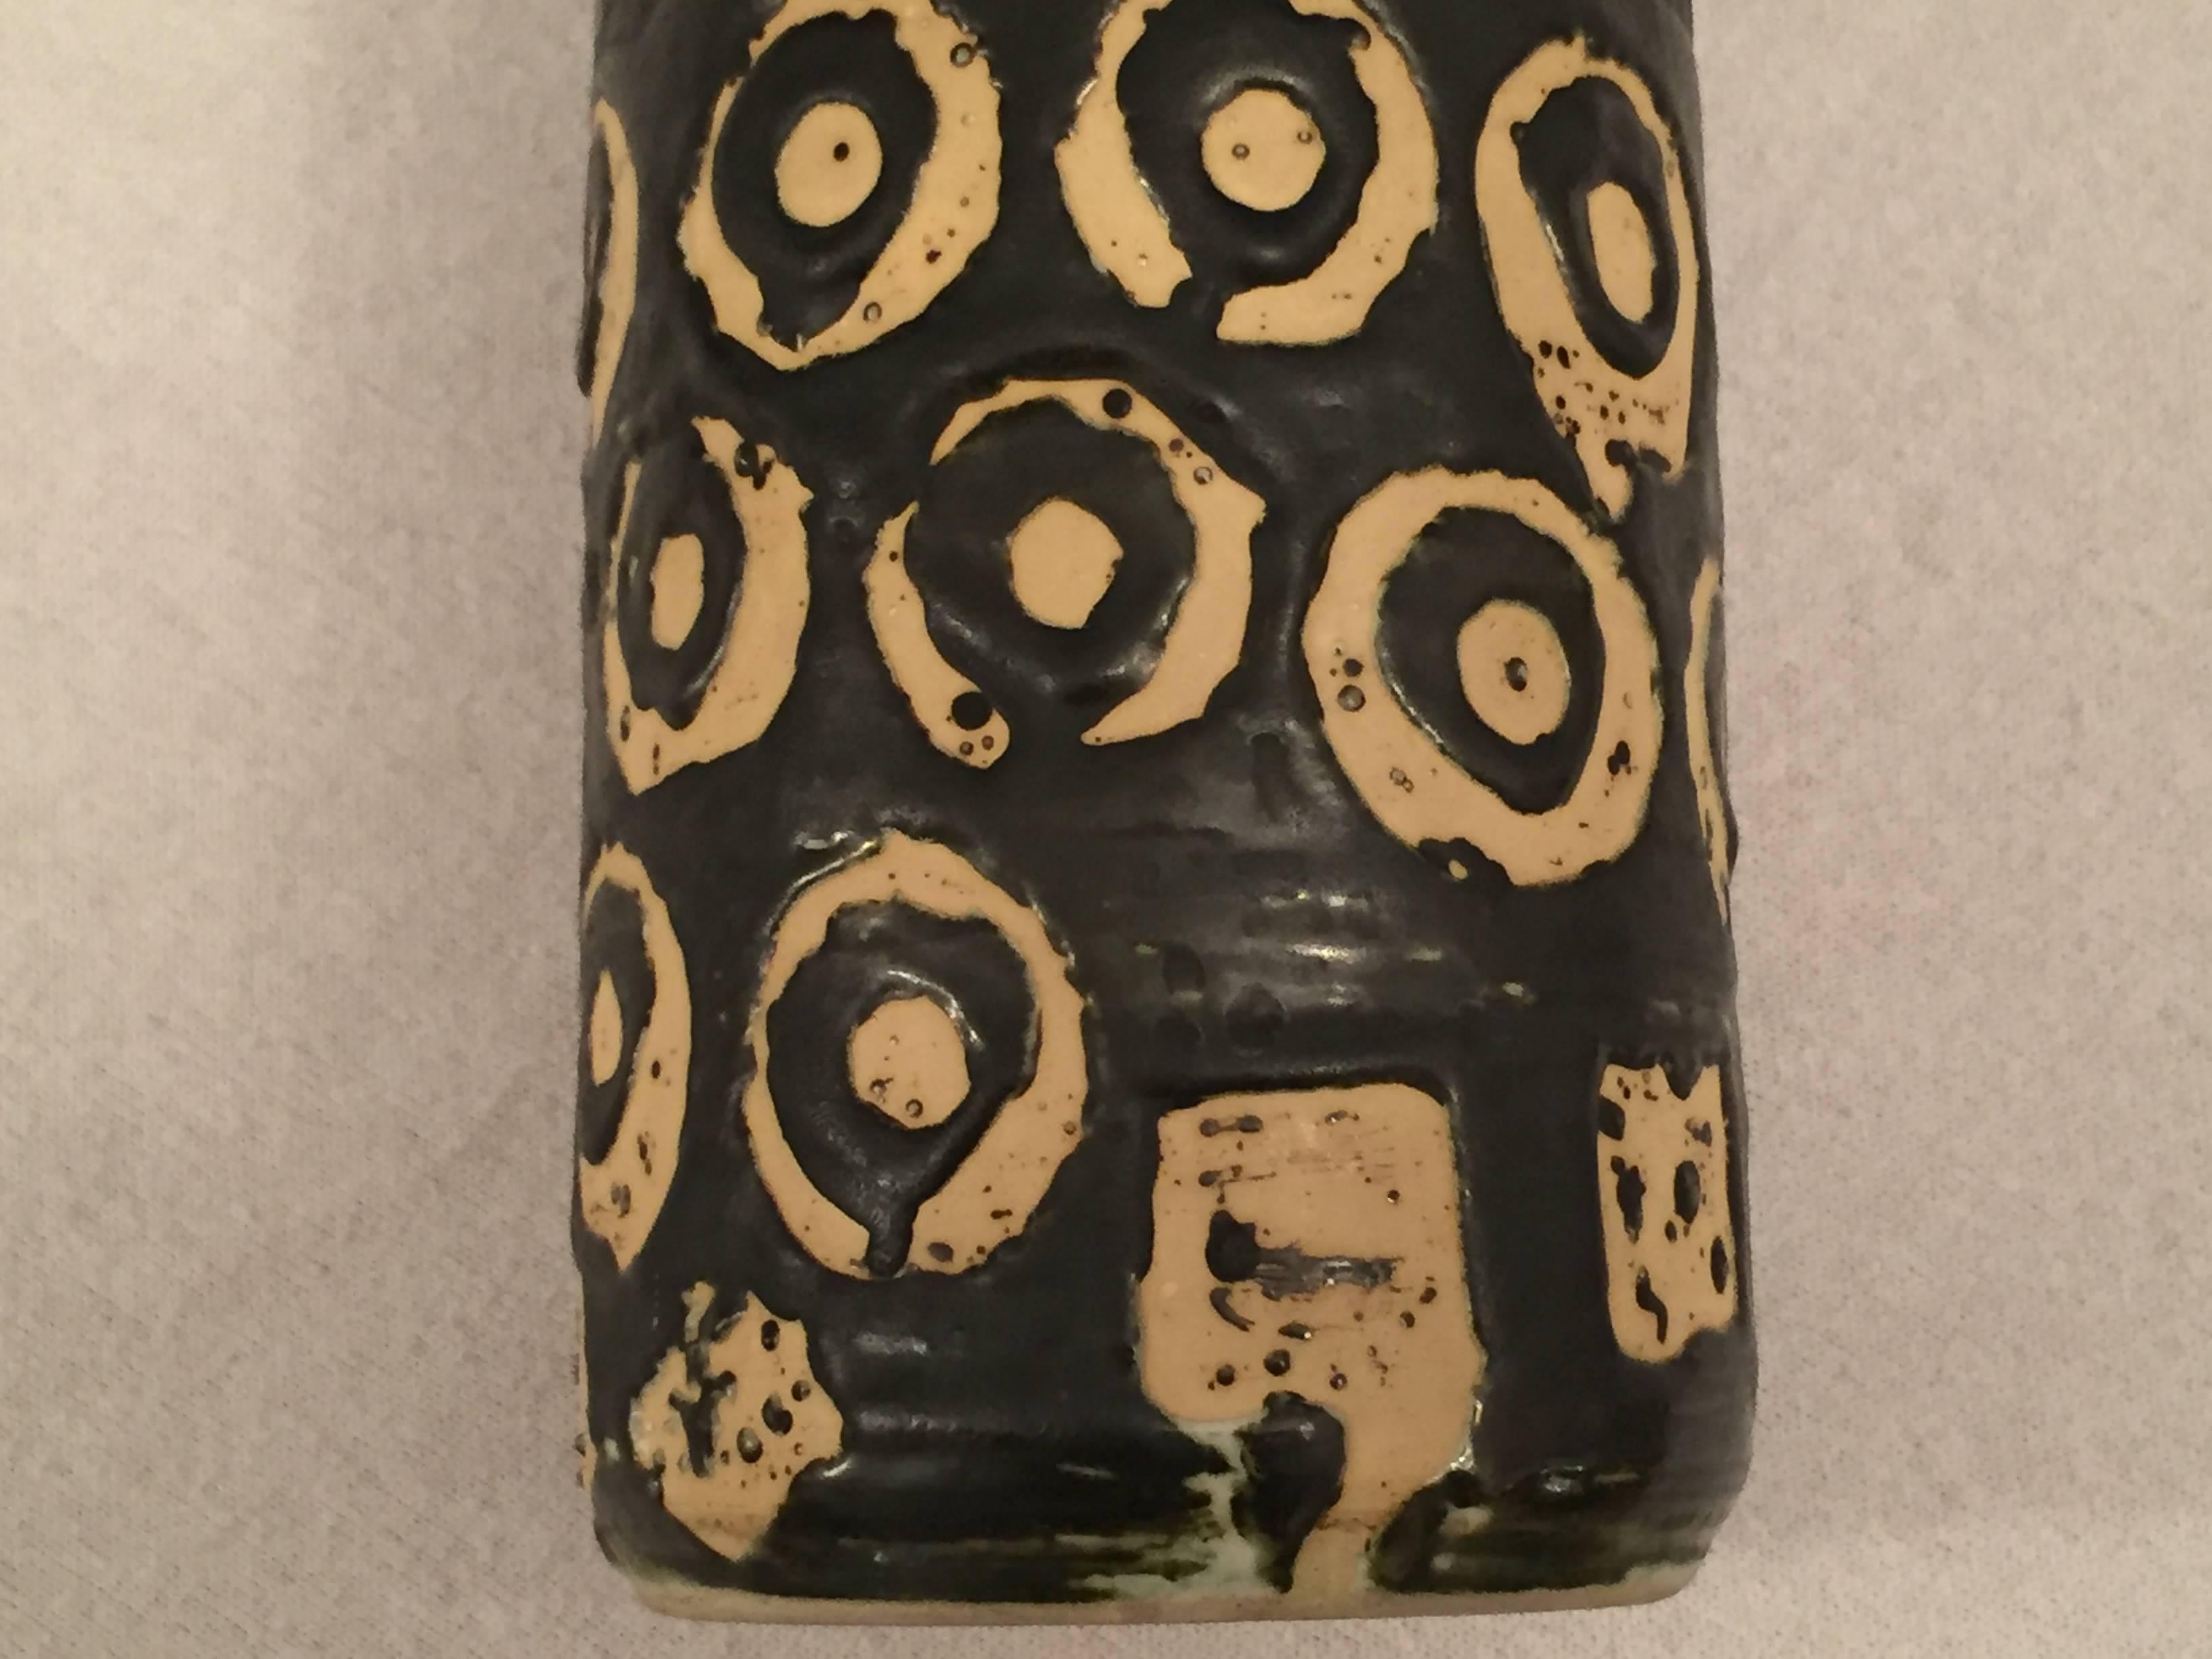 20th Century Ceramic Bottle or Vase with a Cork, Germany 1950s, Lava Glaze